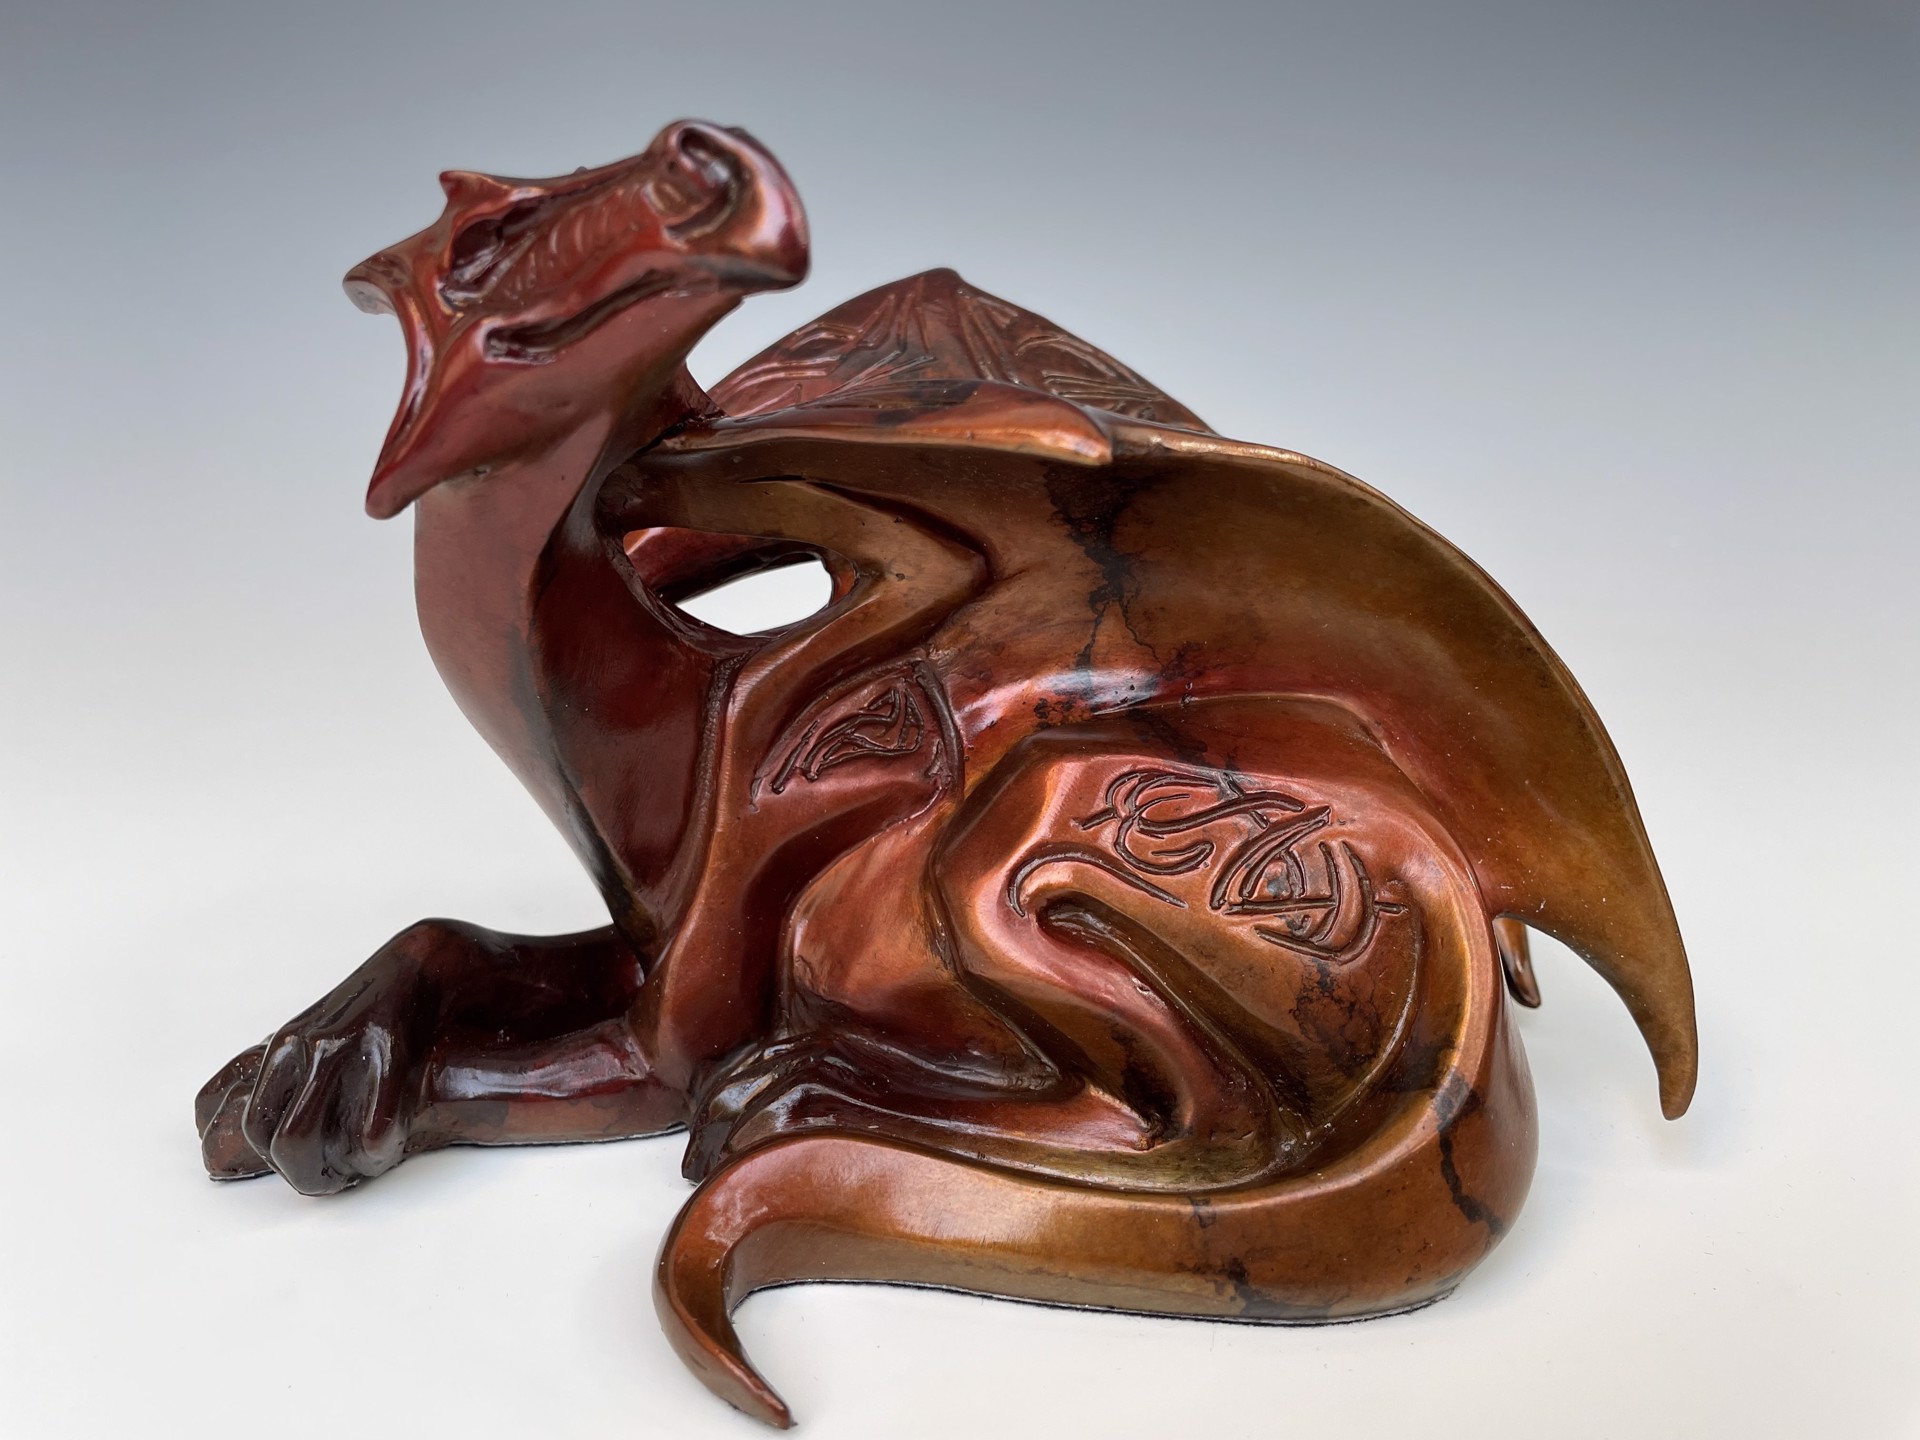 Dragon Commission by John Maisano